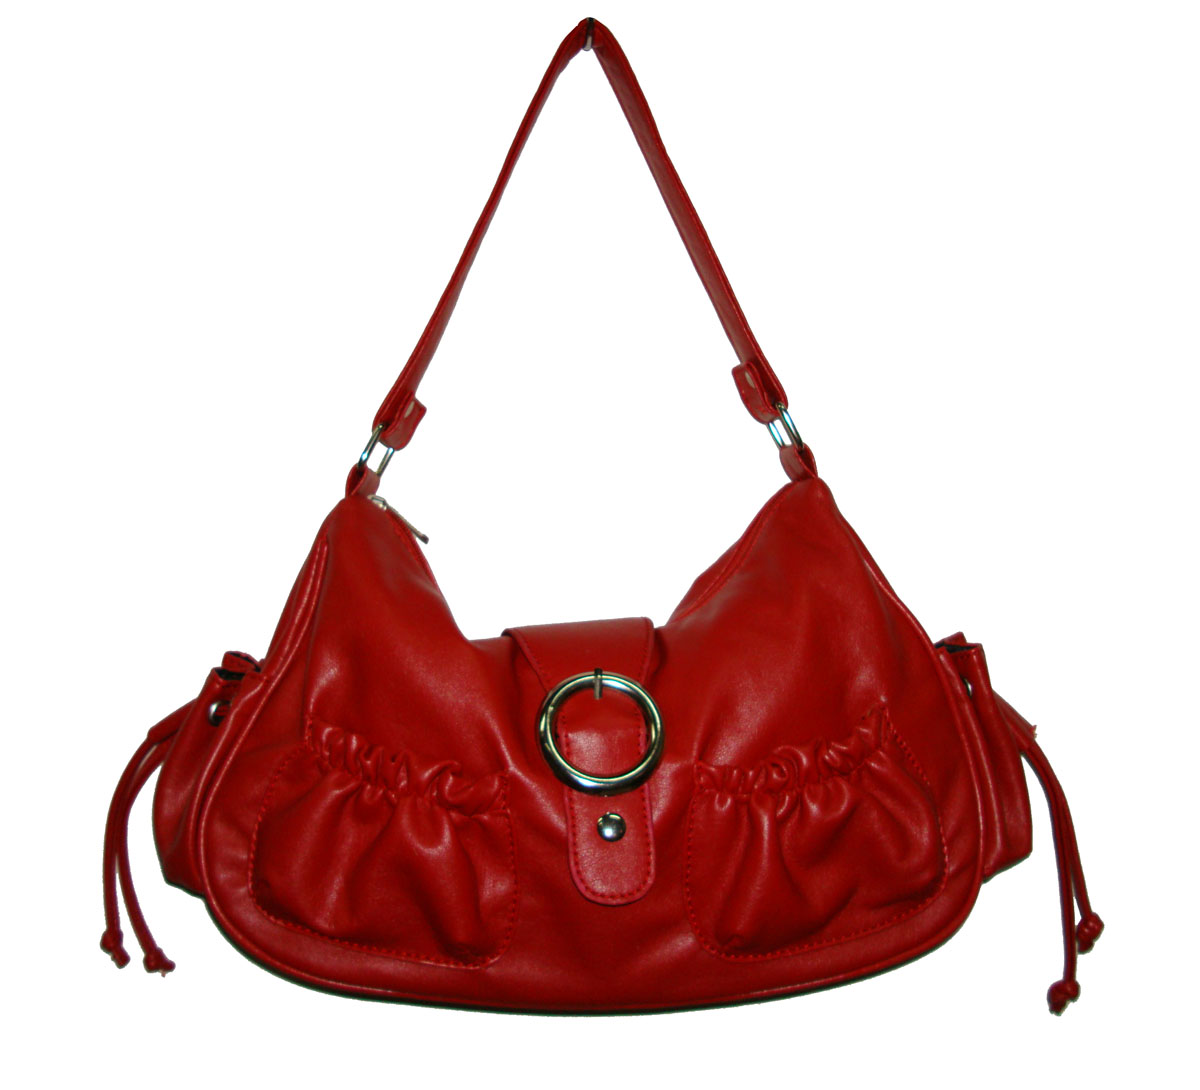 New Fashion Styles: Latest Ladies Handbags Design 2013